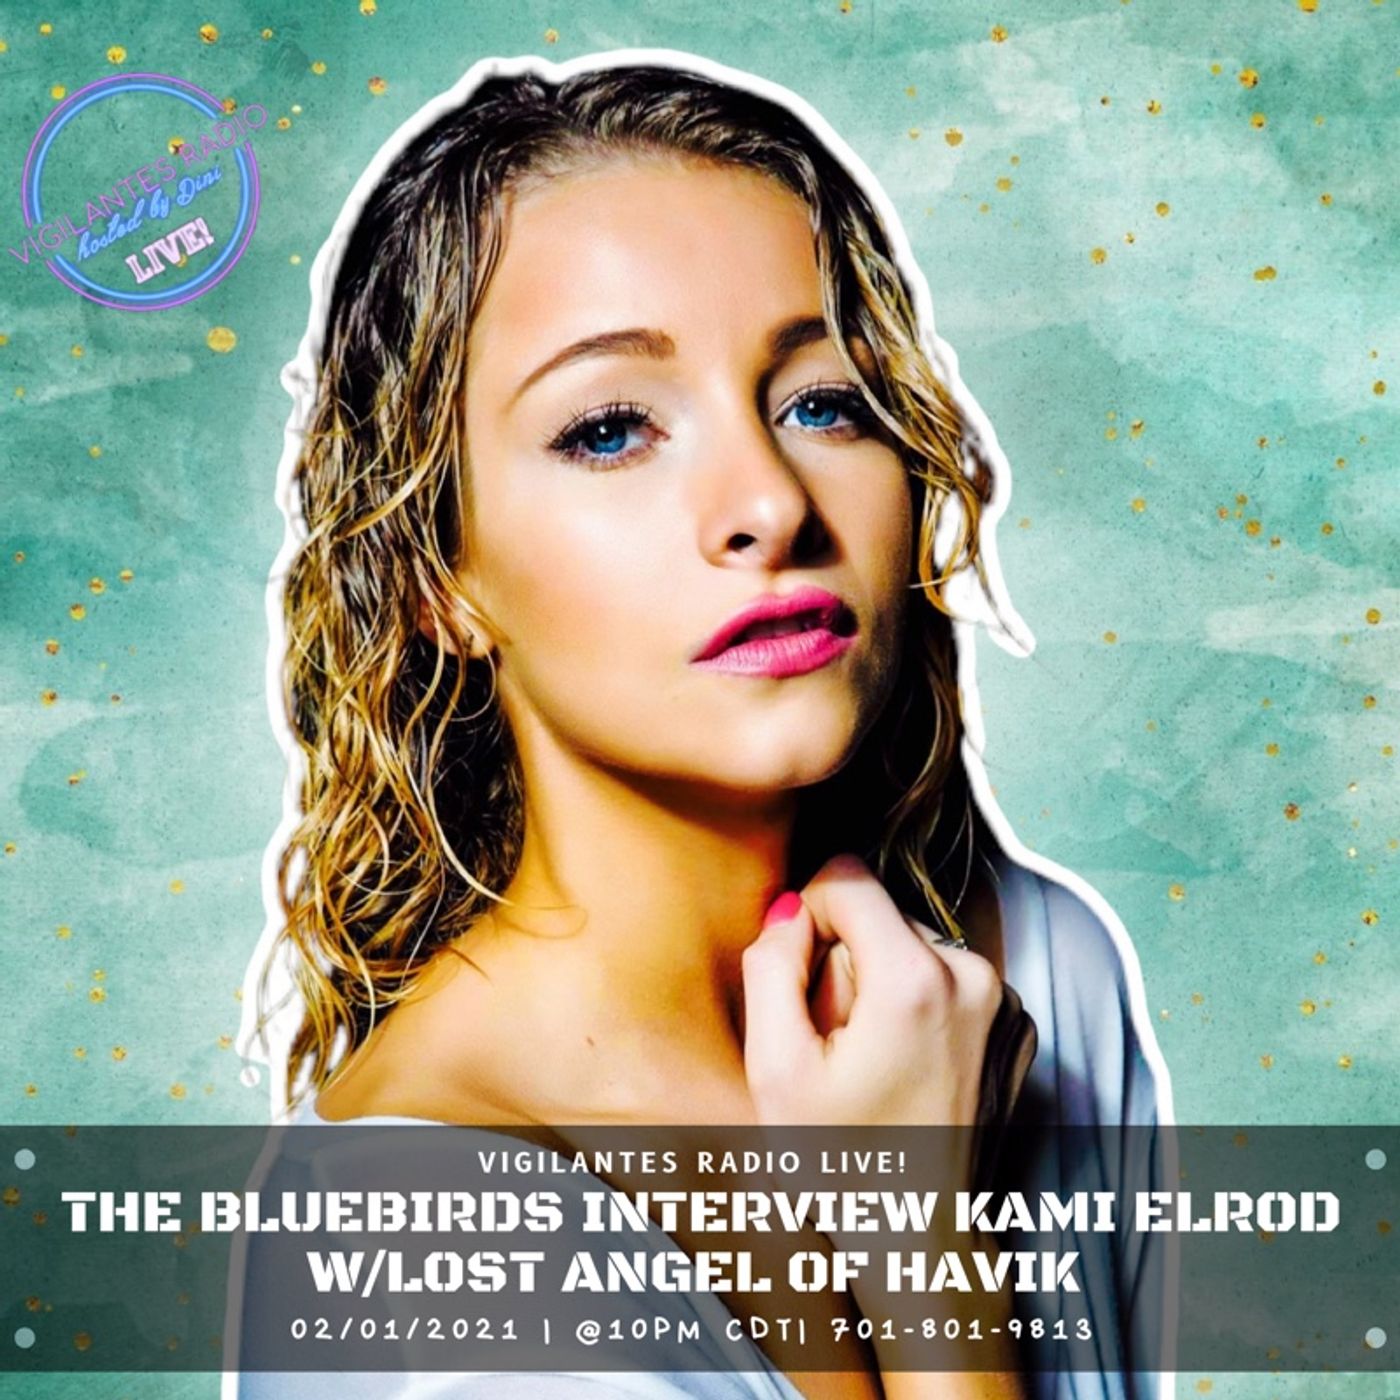 The Bluebirds Interview Kami Elrod W/Lost Angel of Havik. Image